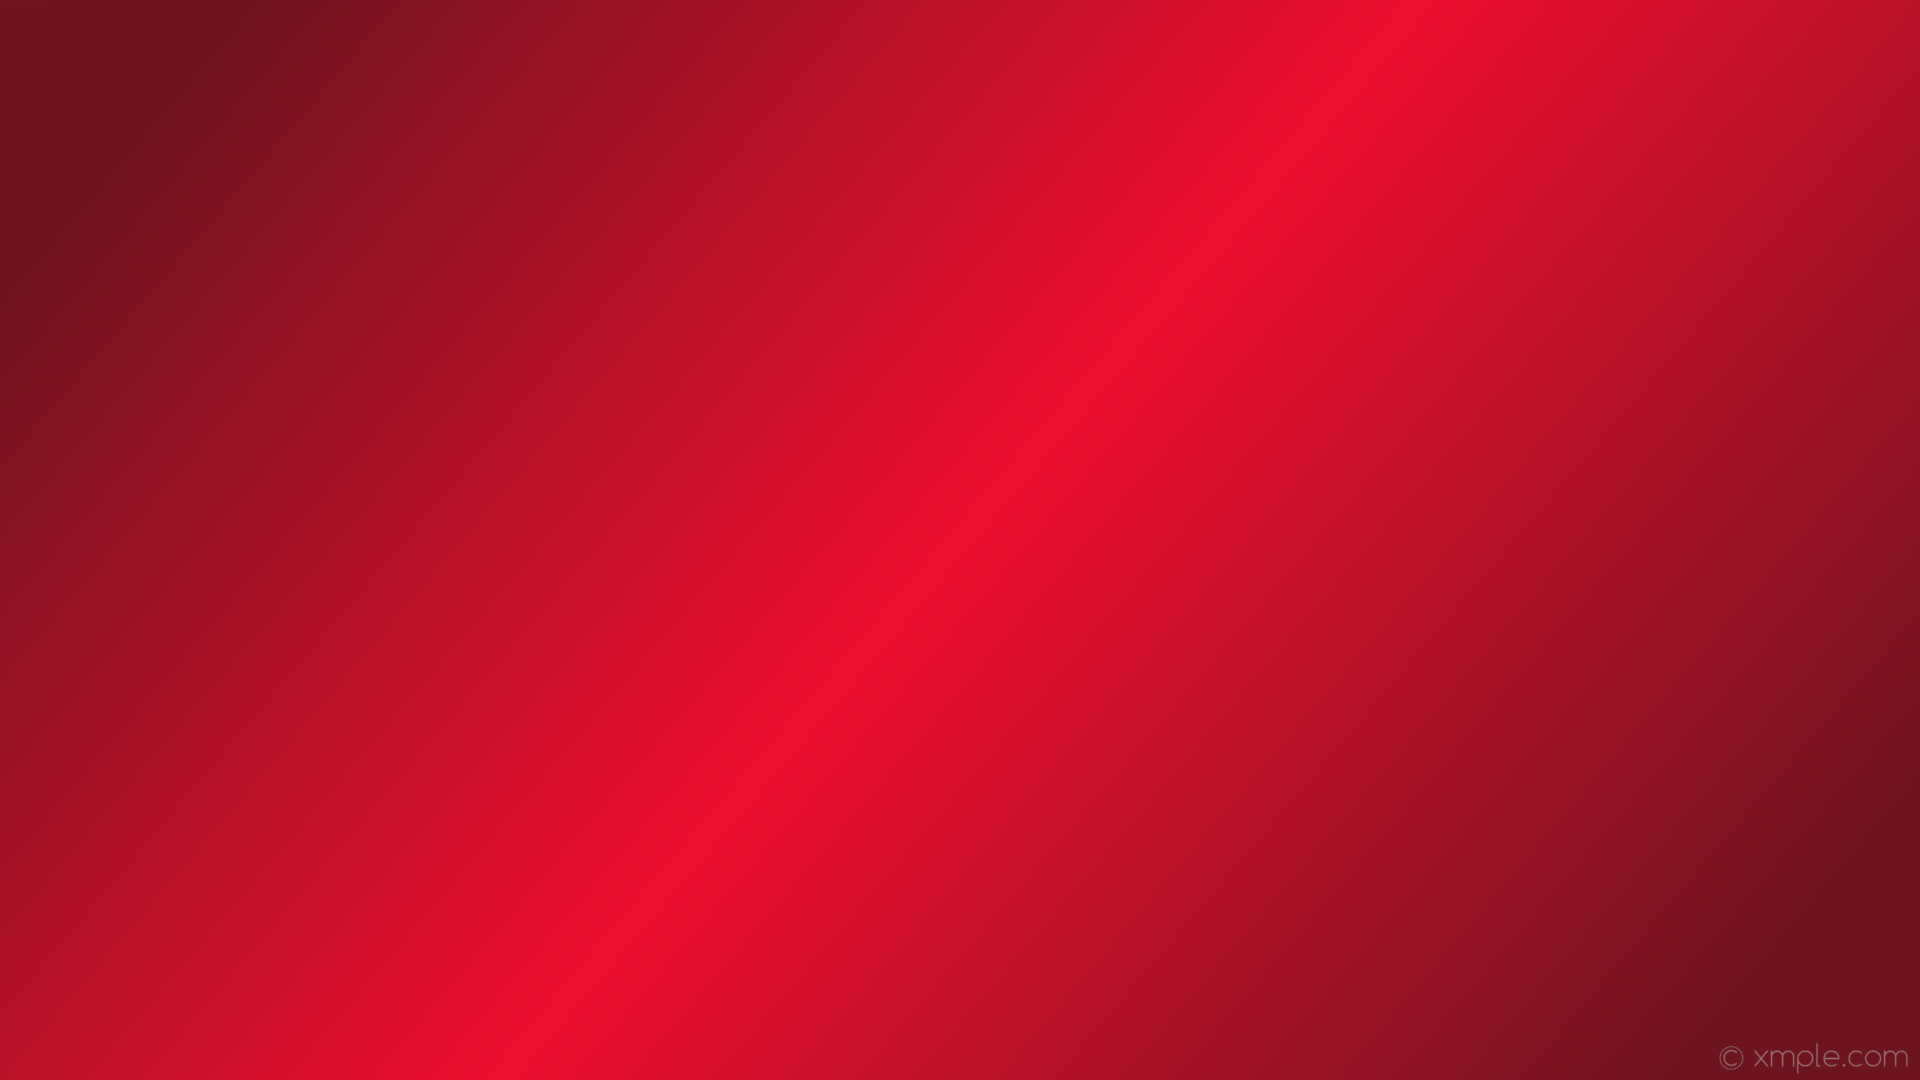 1920x1080 wallpaper red gradient highlight linear #6e1320 #ed0f2e 345Â° 50%